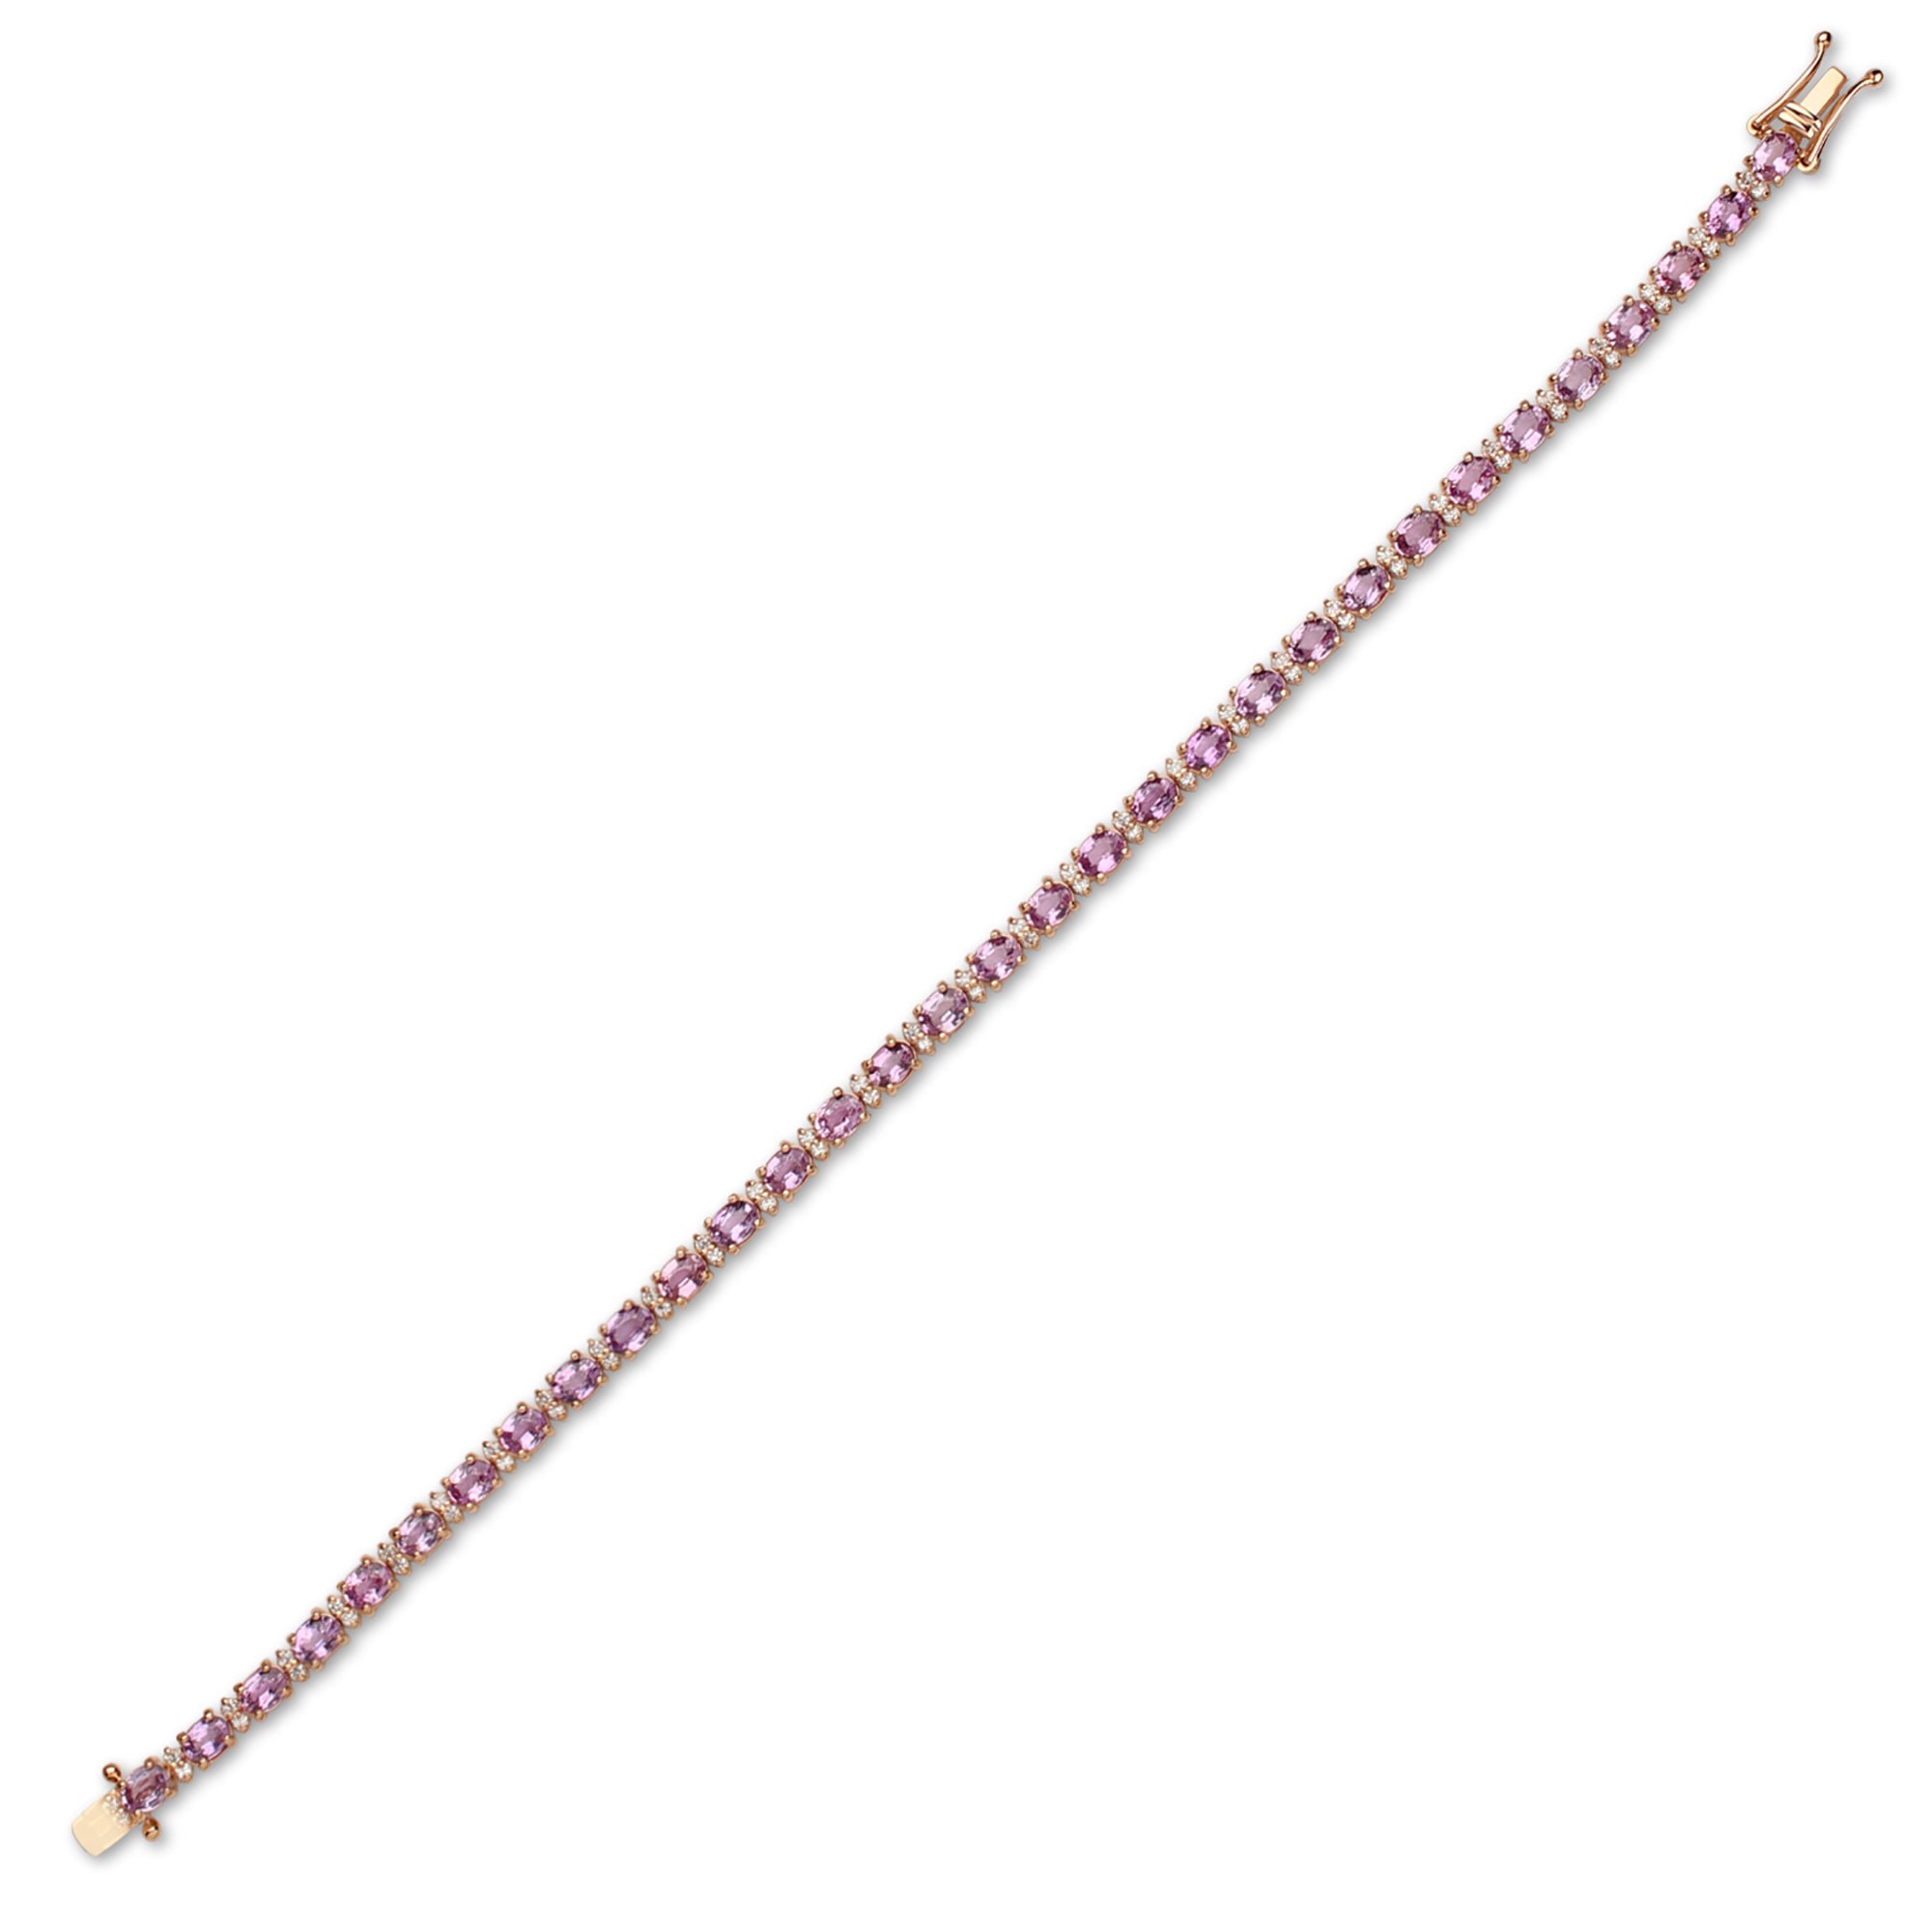 Oval Pink Sapphire Diamond Tennis Bracelet